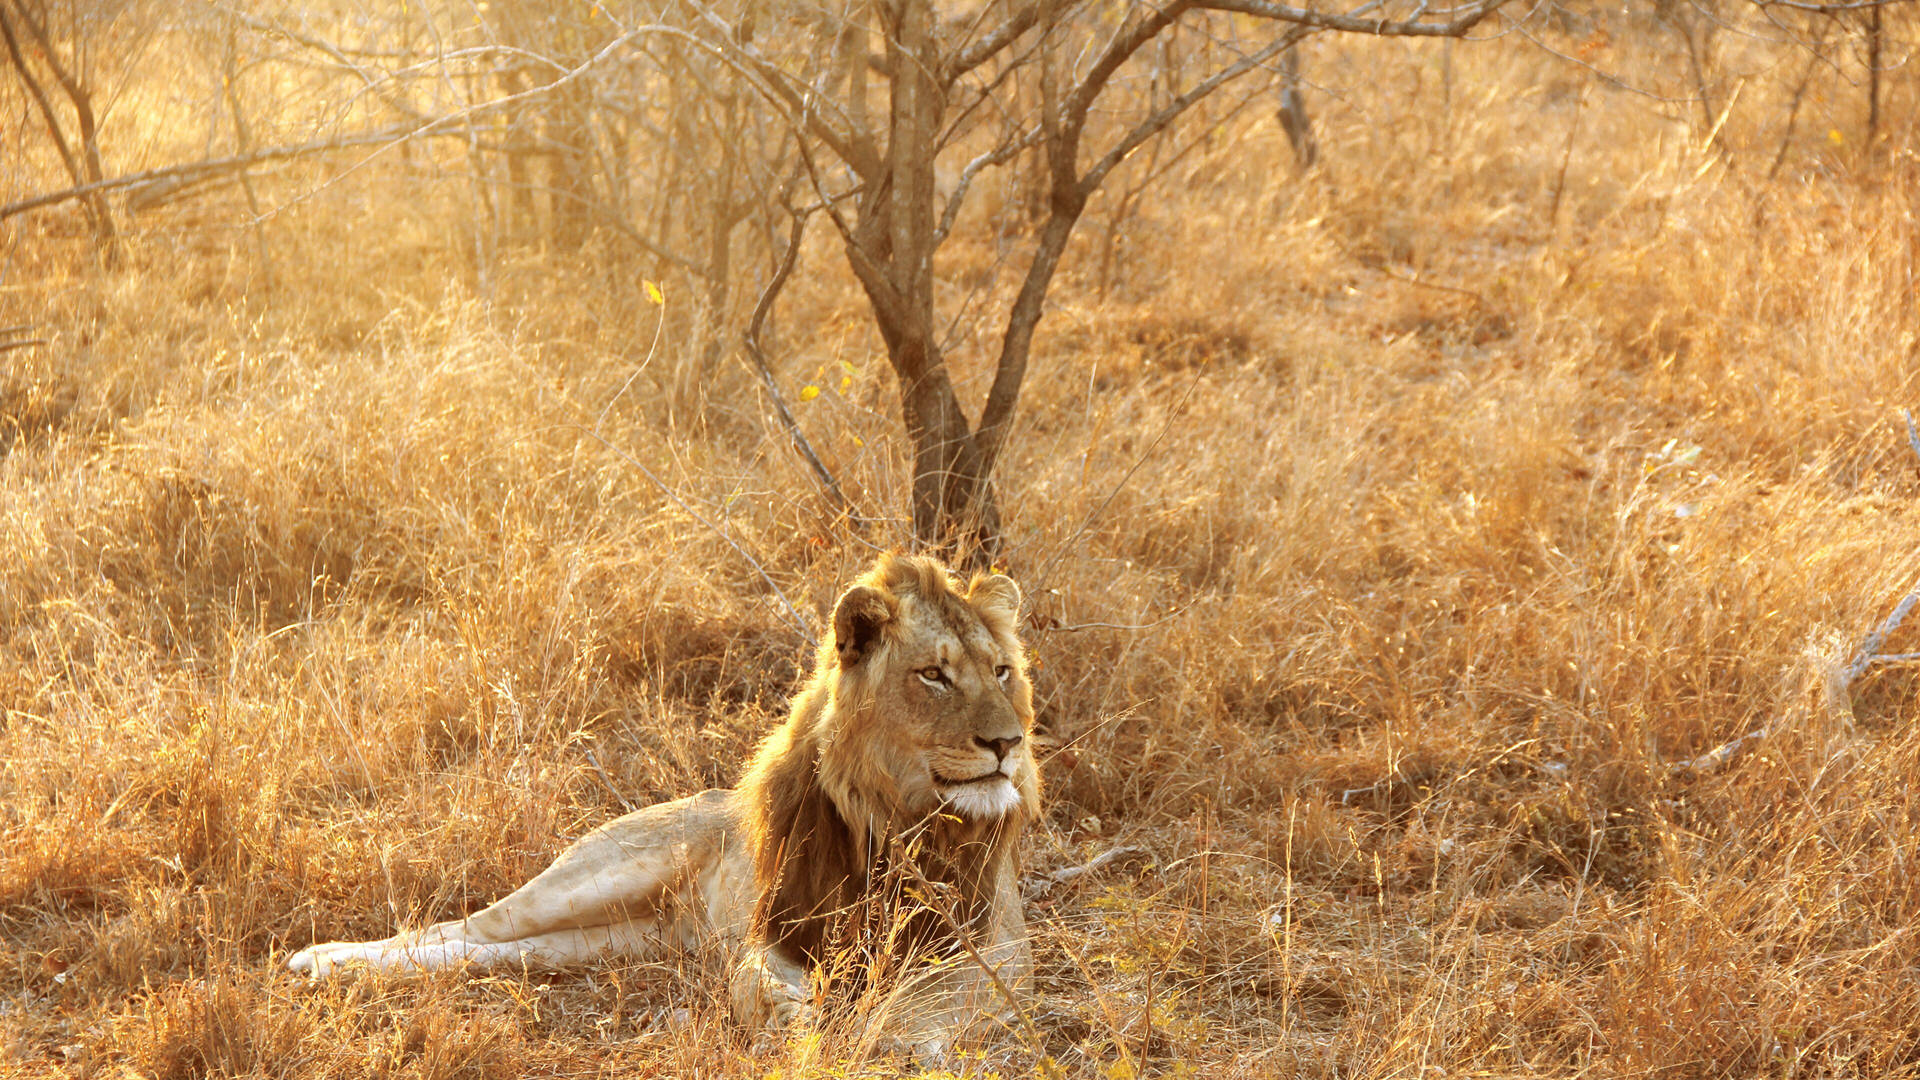 Resting Lion In Africa 4k Wallpaper